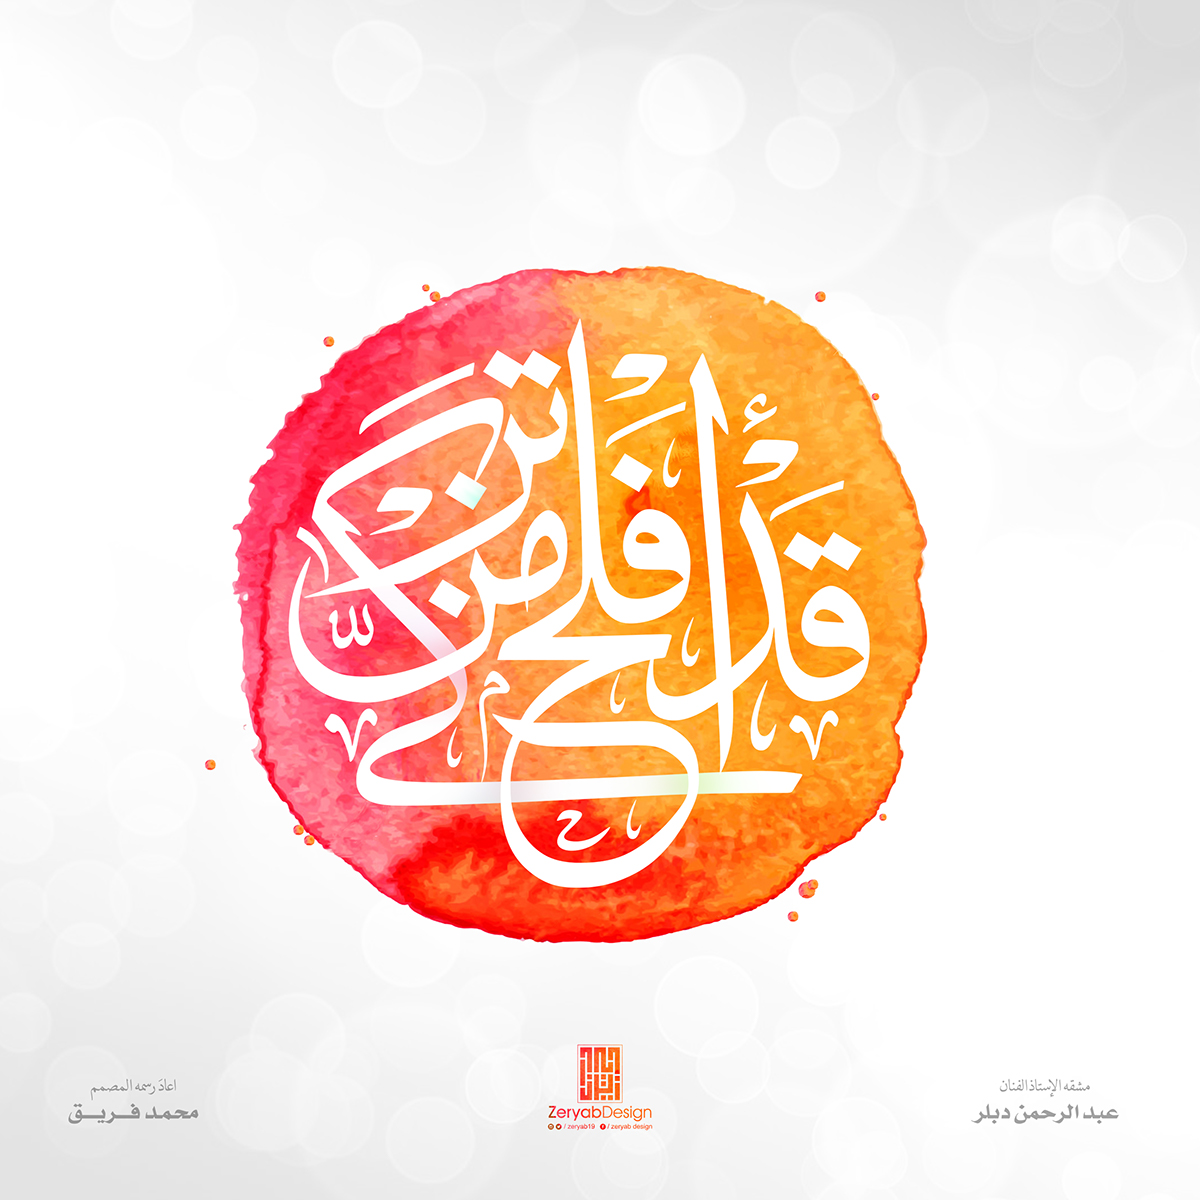 #arabic calligraphy #Arabic #Calligraphy #drawing #watercolors #coloring